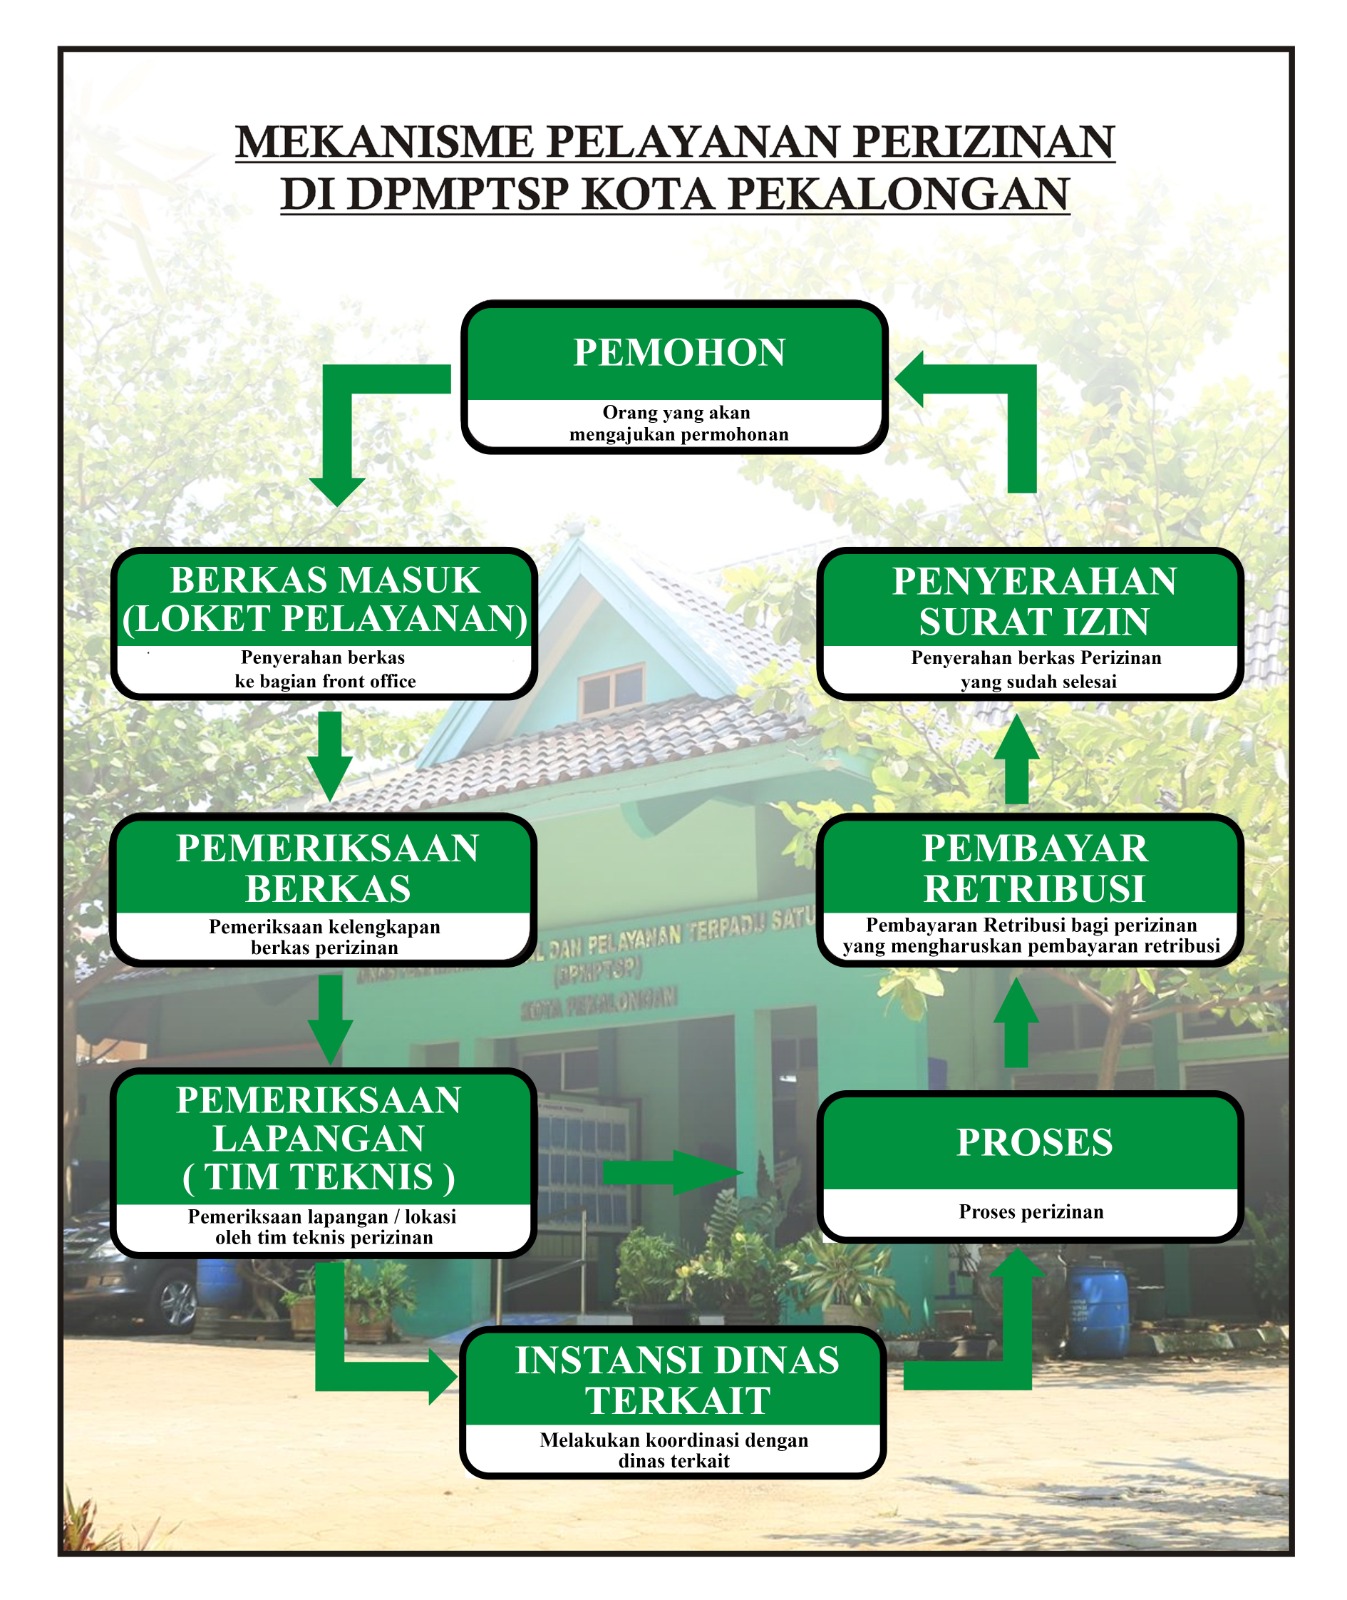 Mekanisme Pelayanan Perizinan di DPMPTSP Kota Pekalongan